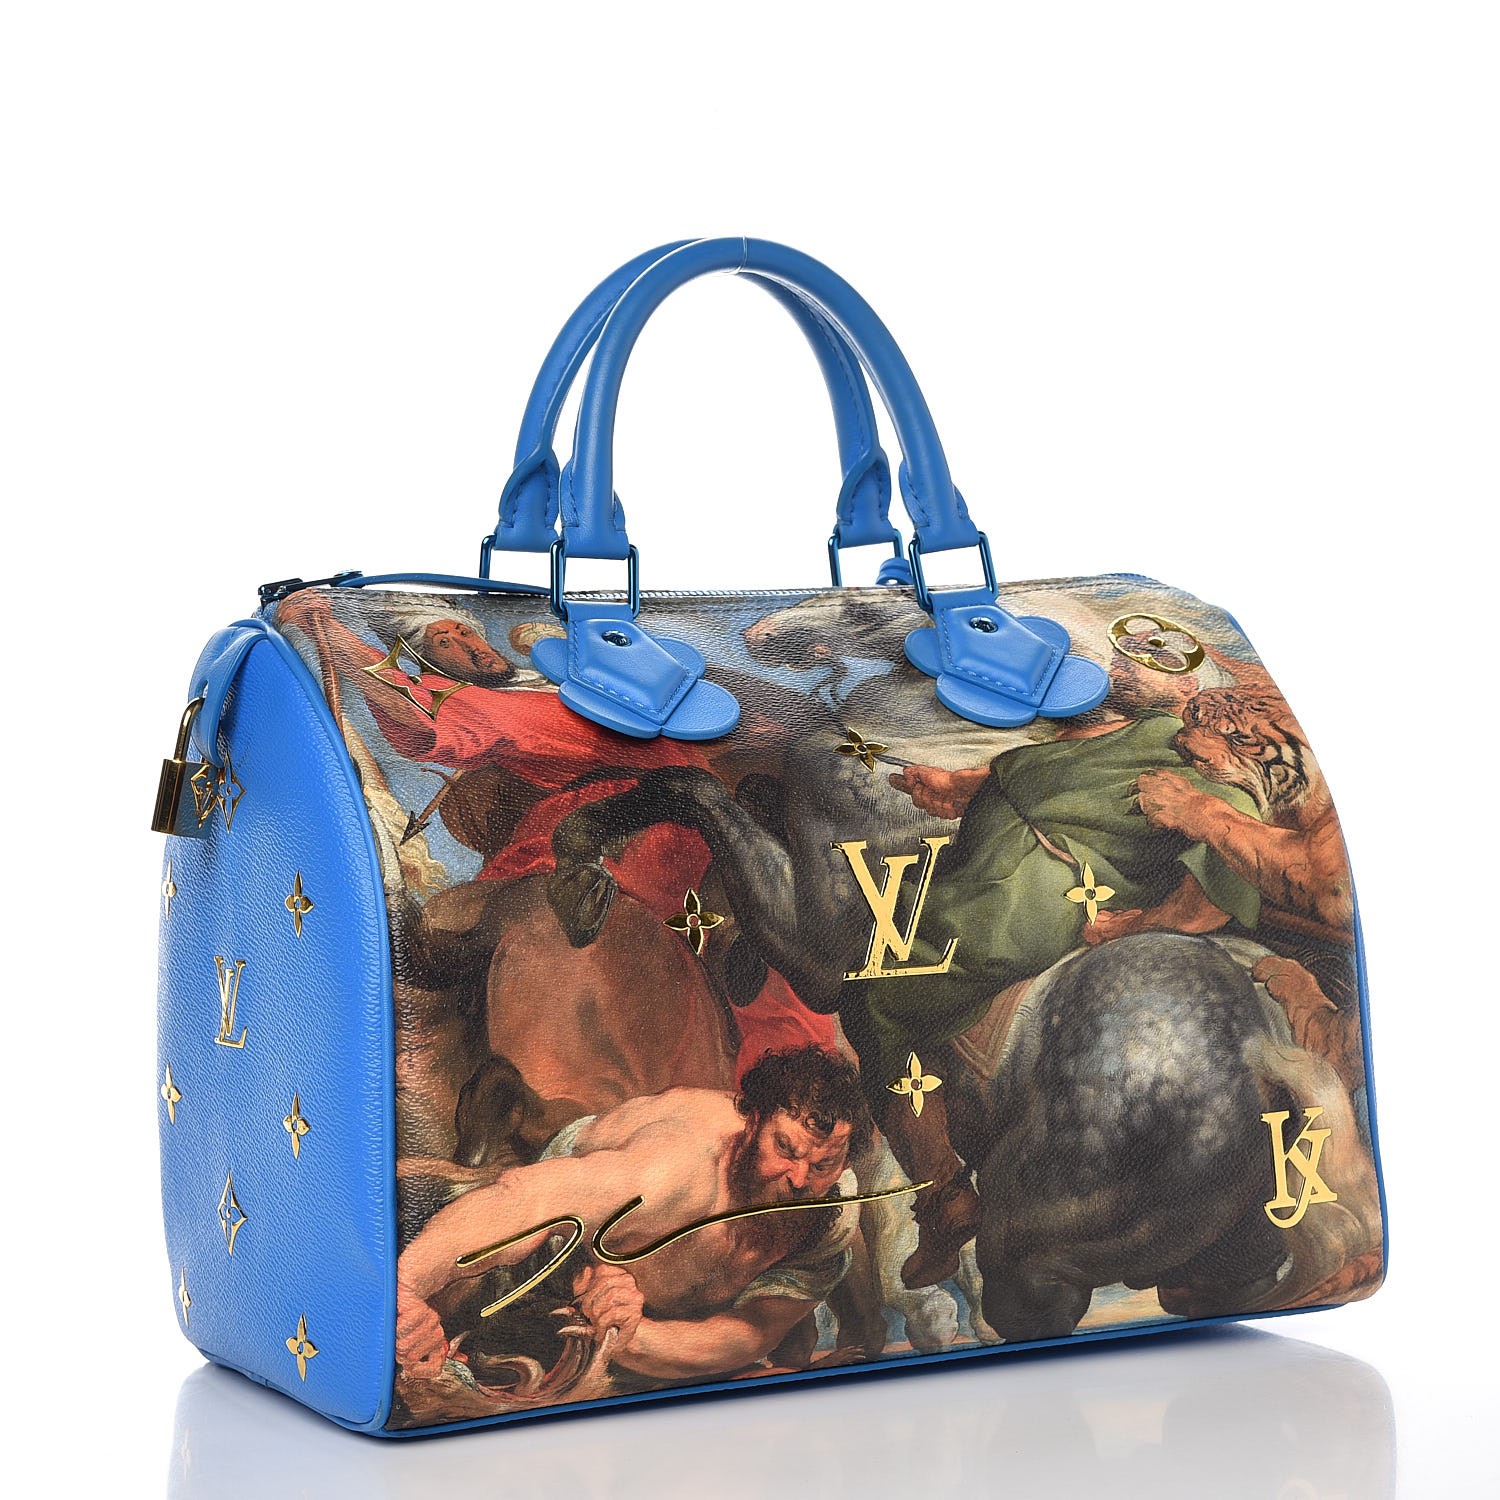 Louis Vuitton Jeff Koons Rubens Bag Archives